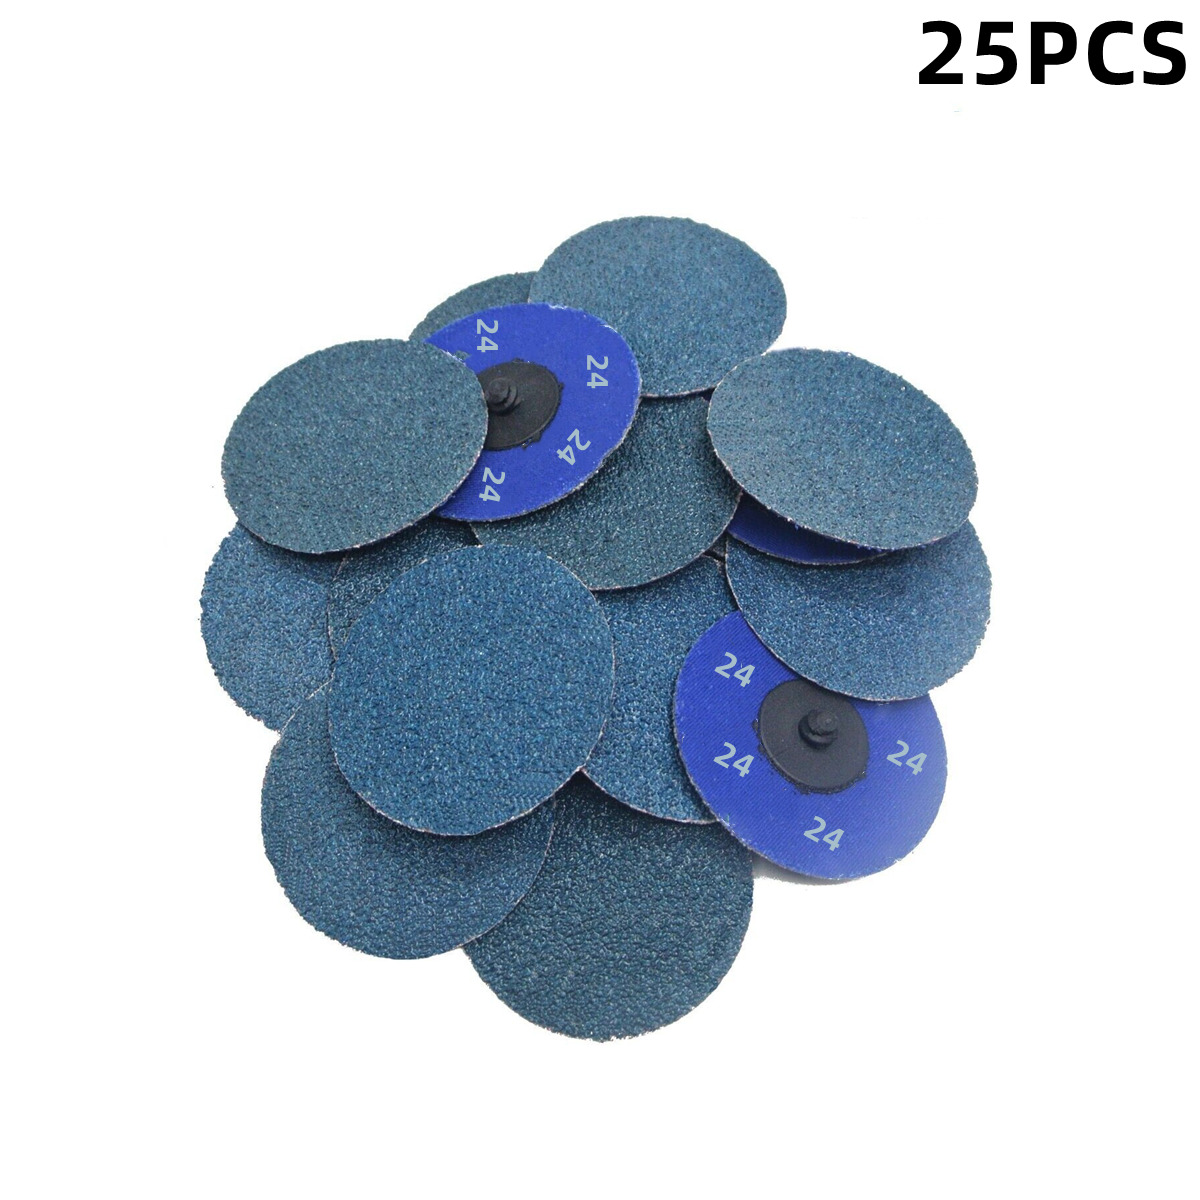 25Pcs 3 inch Zirconia Roll Lock Sanding Discs Grinding Pads 24 36 60 80 120 Grit